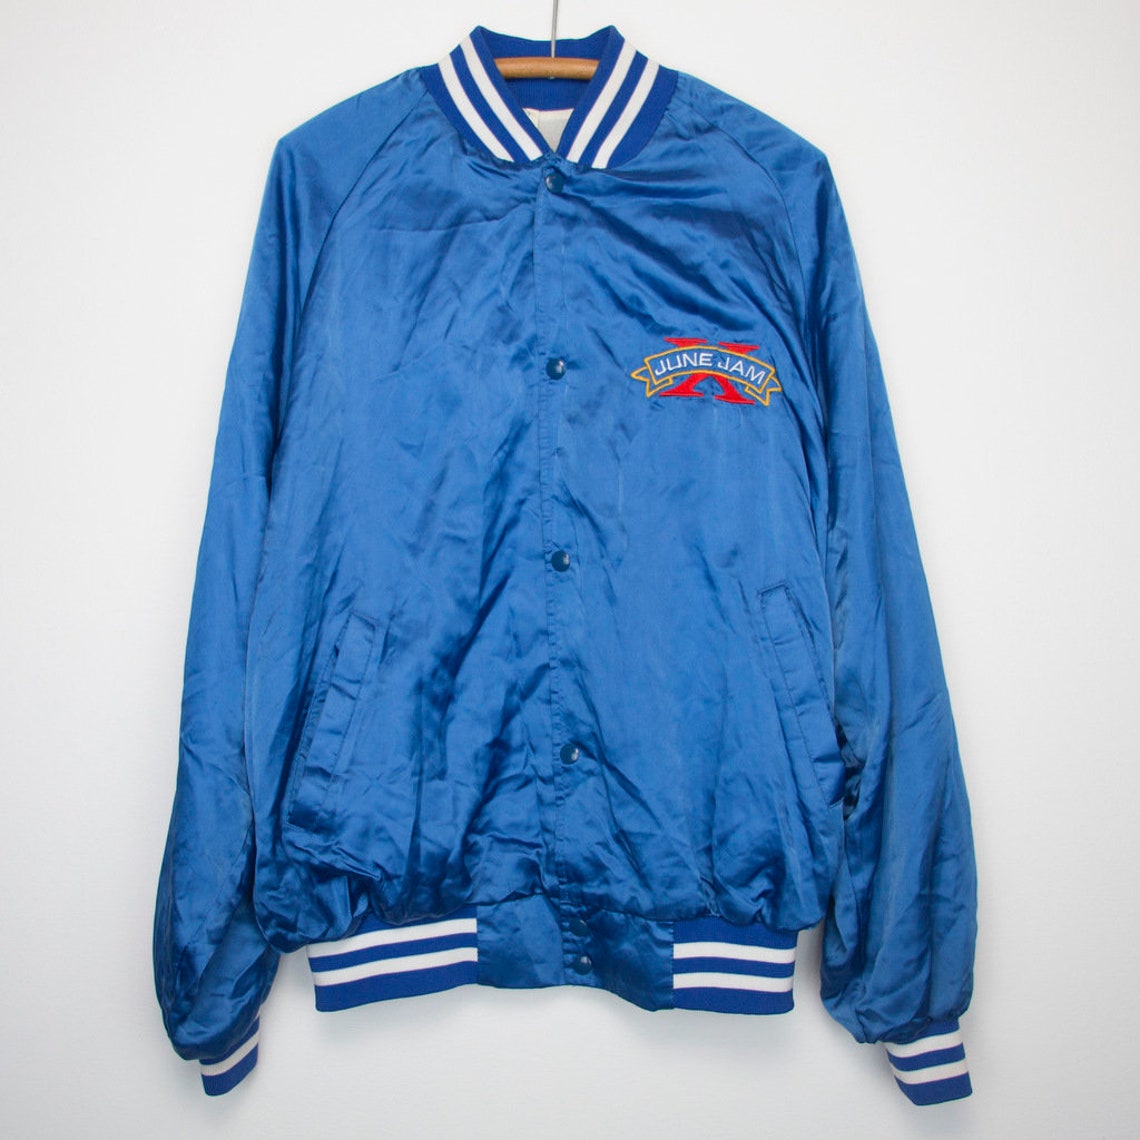 Alabama Jacket Vintage Coat 1992 June Jam Concert Windbreaker | Etsy